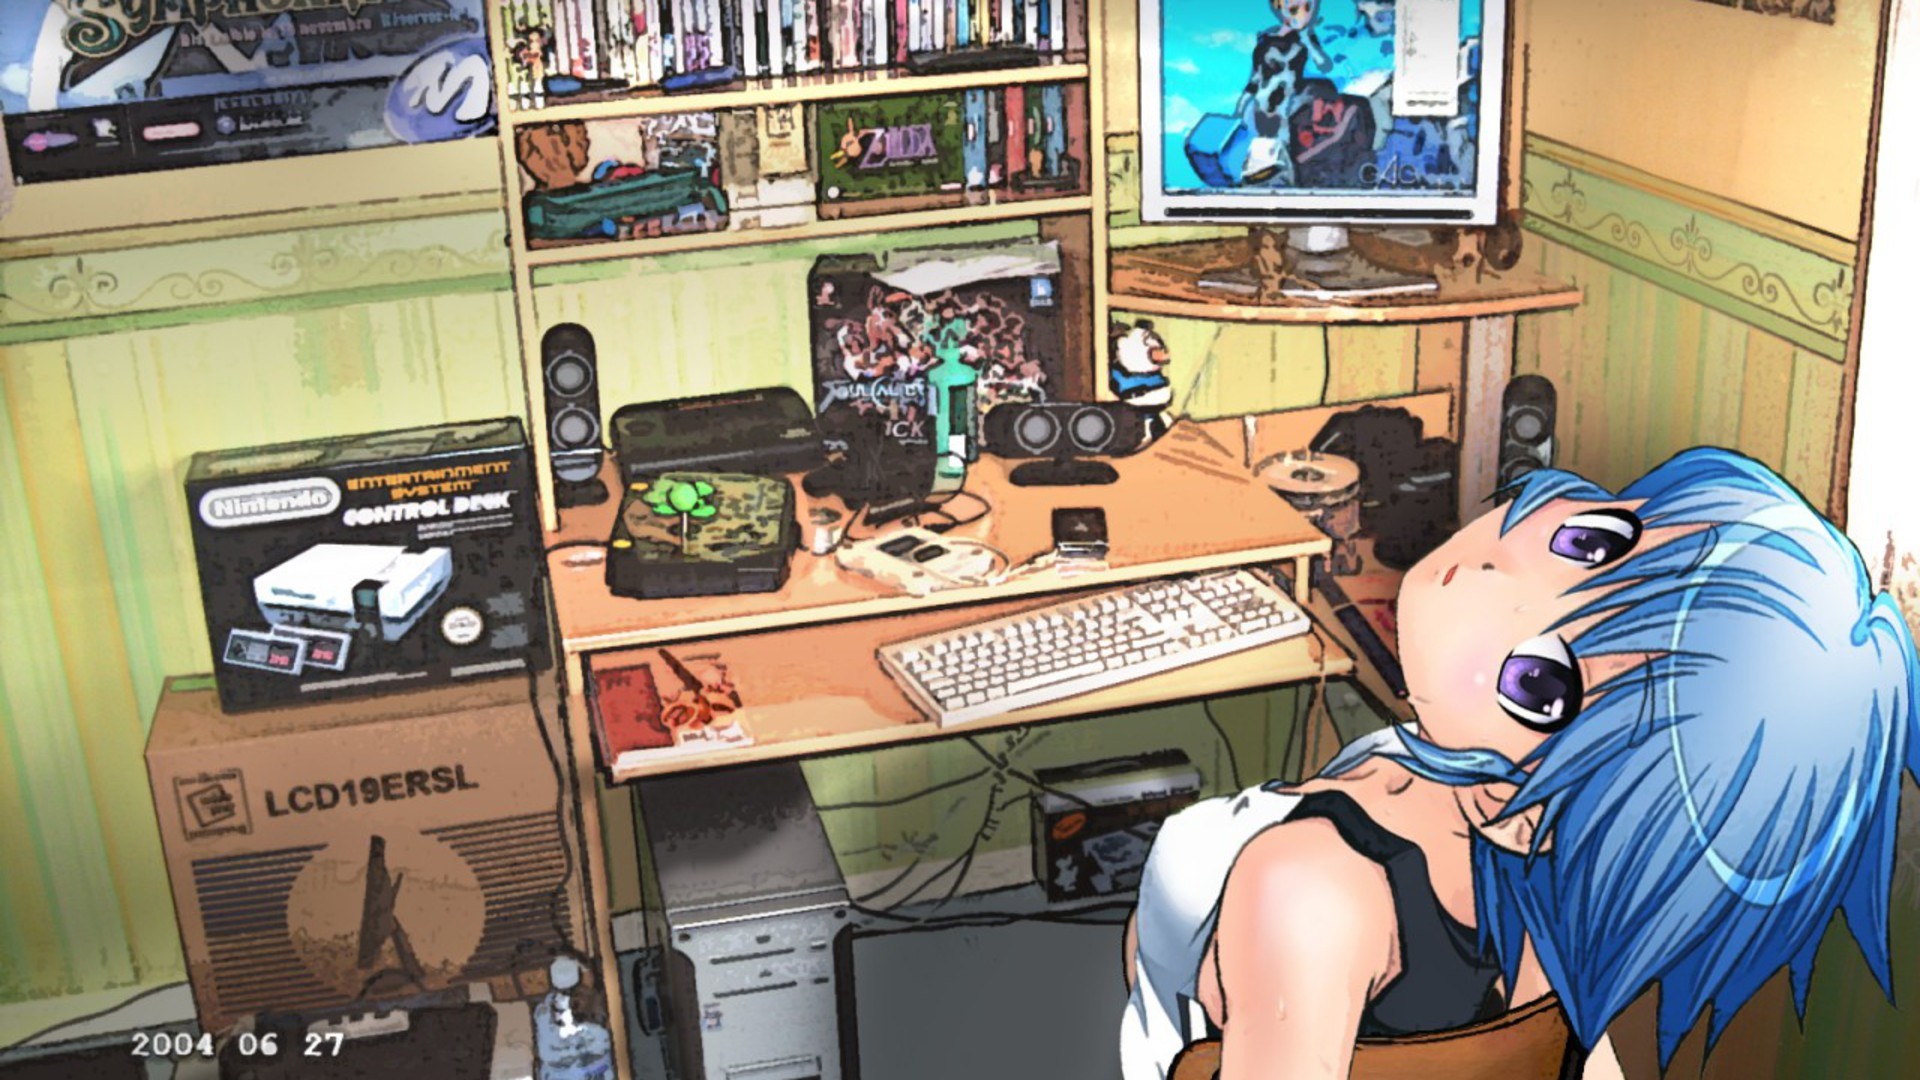 Nintendo, video games, computers, keyboards, blue hair, books, The Legend of Zelda, messy, anime, purple eyes, anime girls, DVD covers - desktop wallpaper